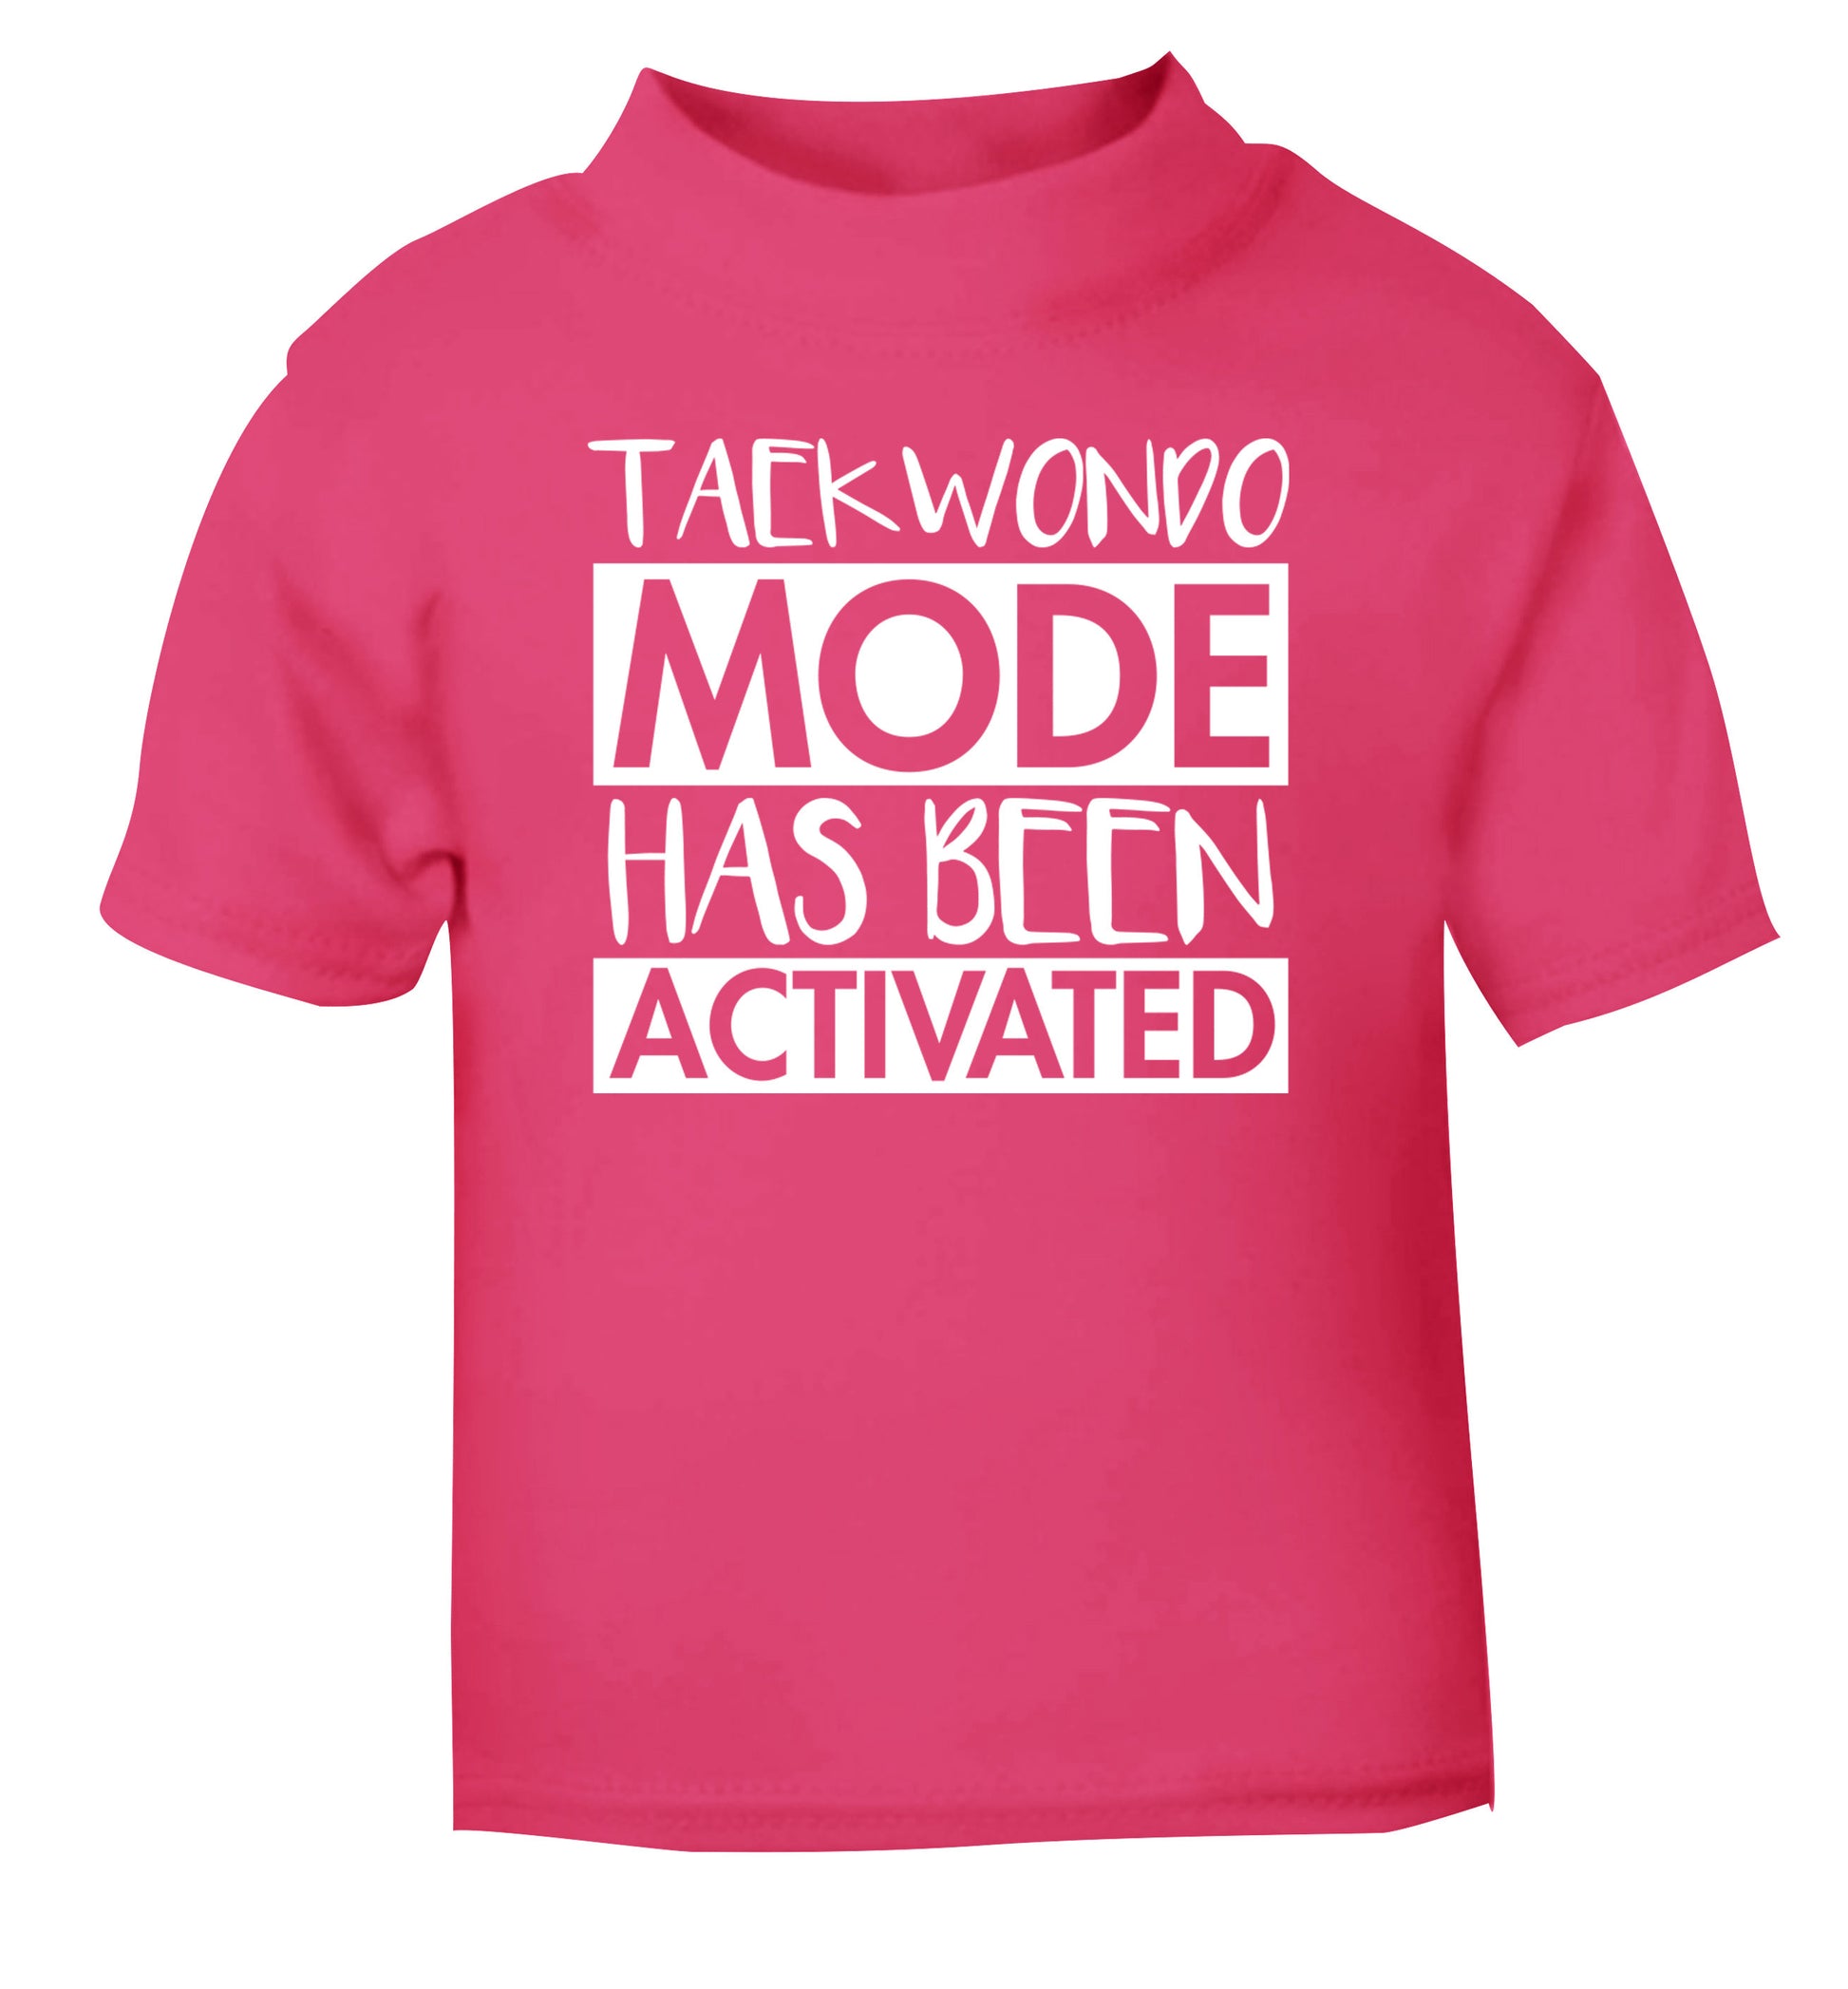 Taekwondo mode activated pink Baby Toddler Tshirt 2 Years